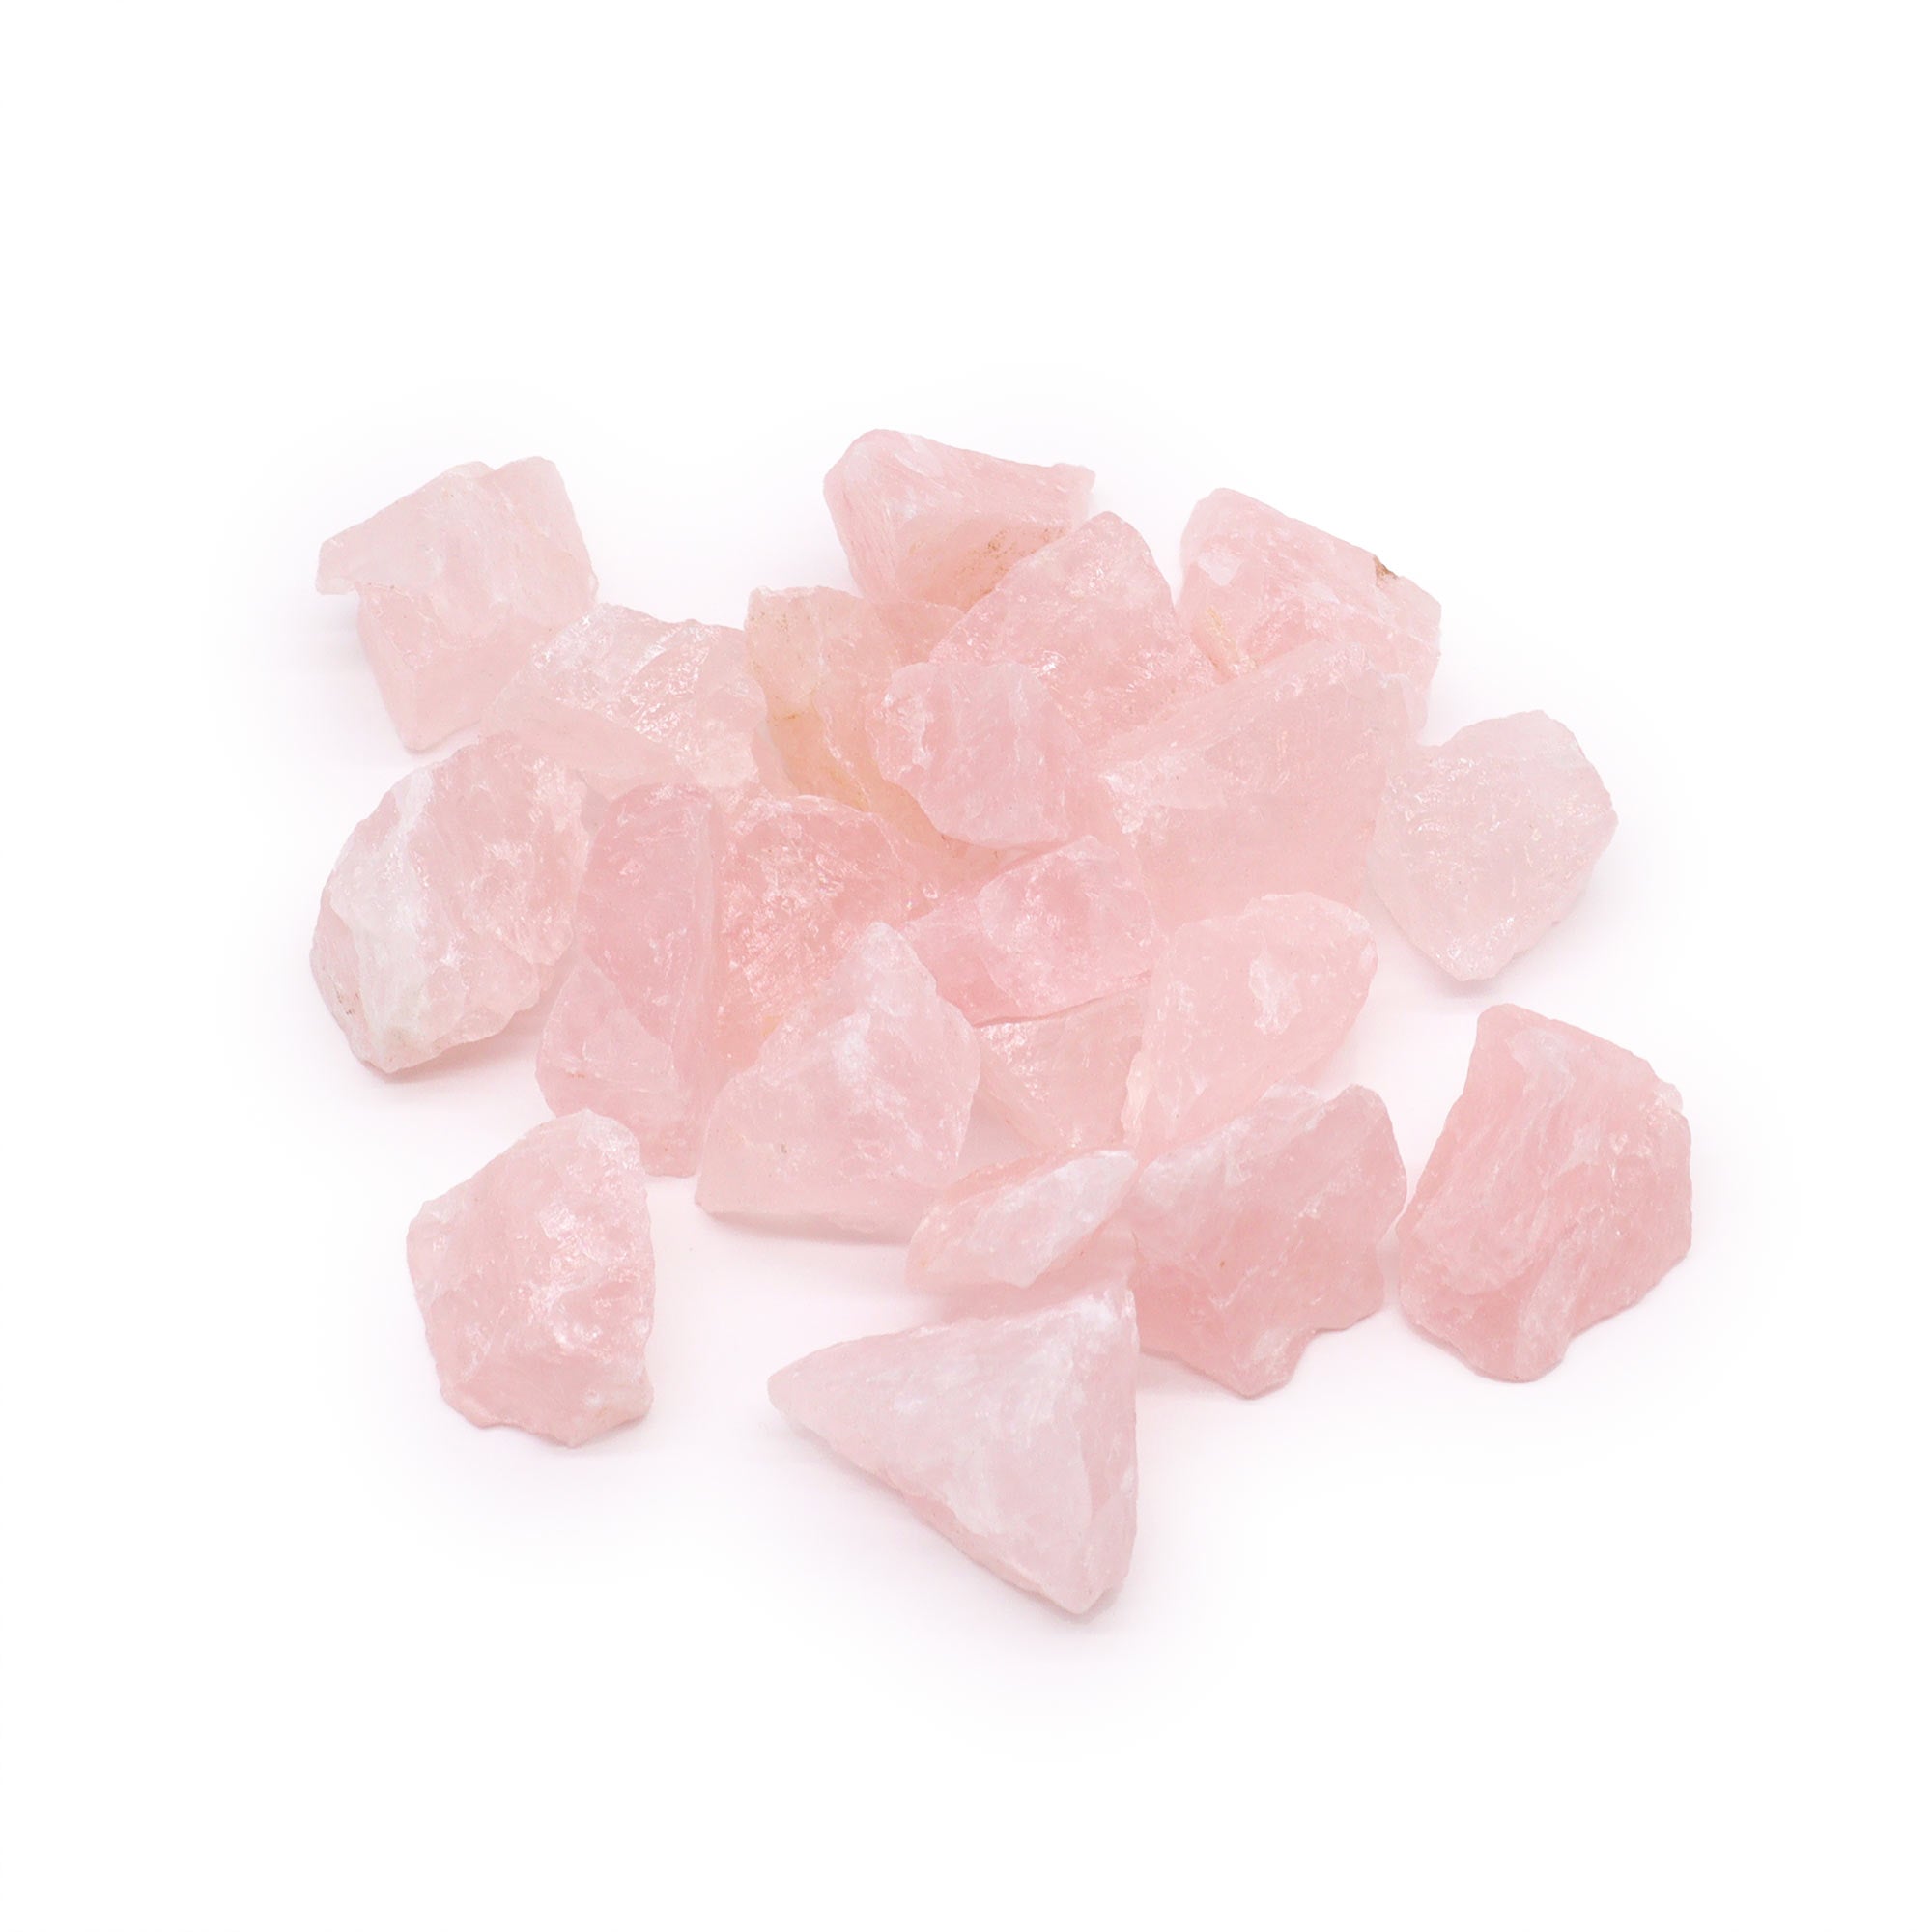 View Raw Crystals 500gm Rose Quartz information